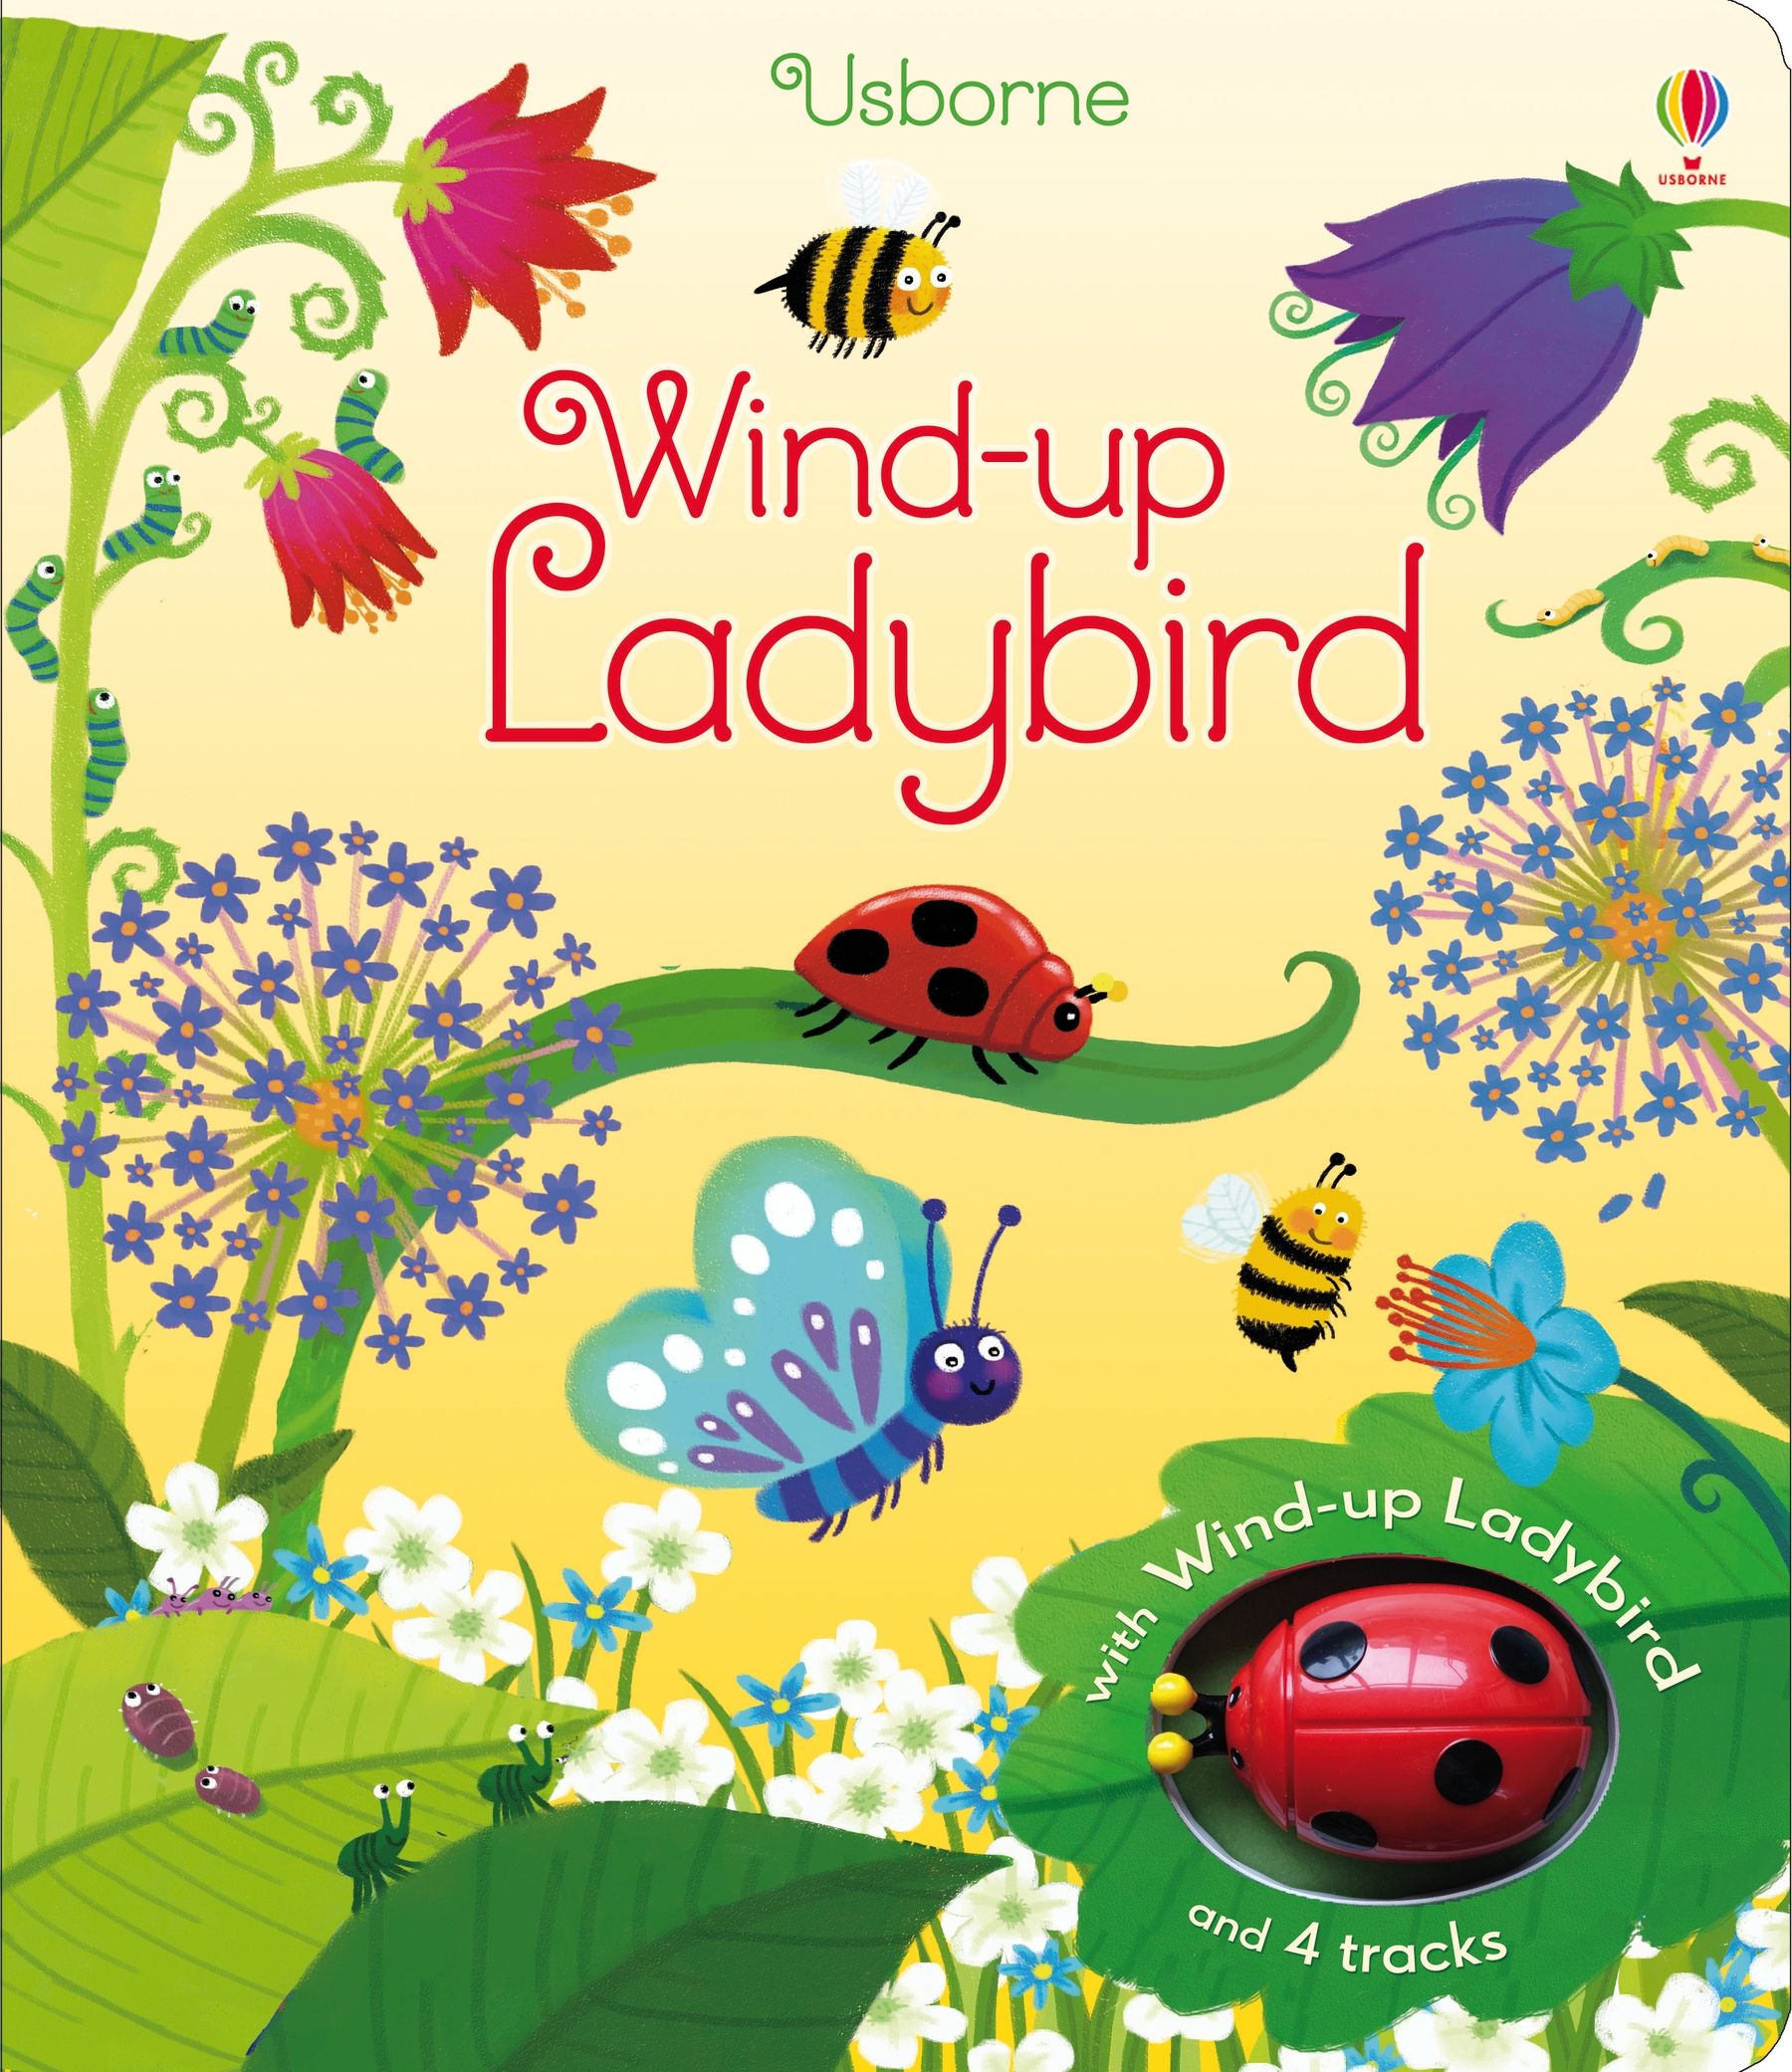 Інтерактивна книжка Wind-up Ladybird - Fiona Watt, англ. мова (9781409583882) - фото 1